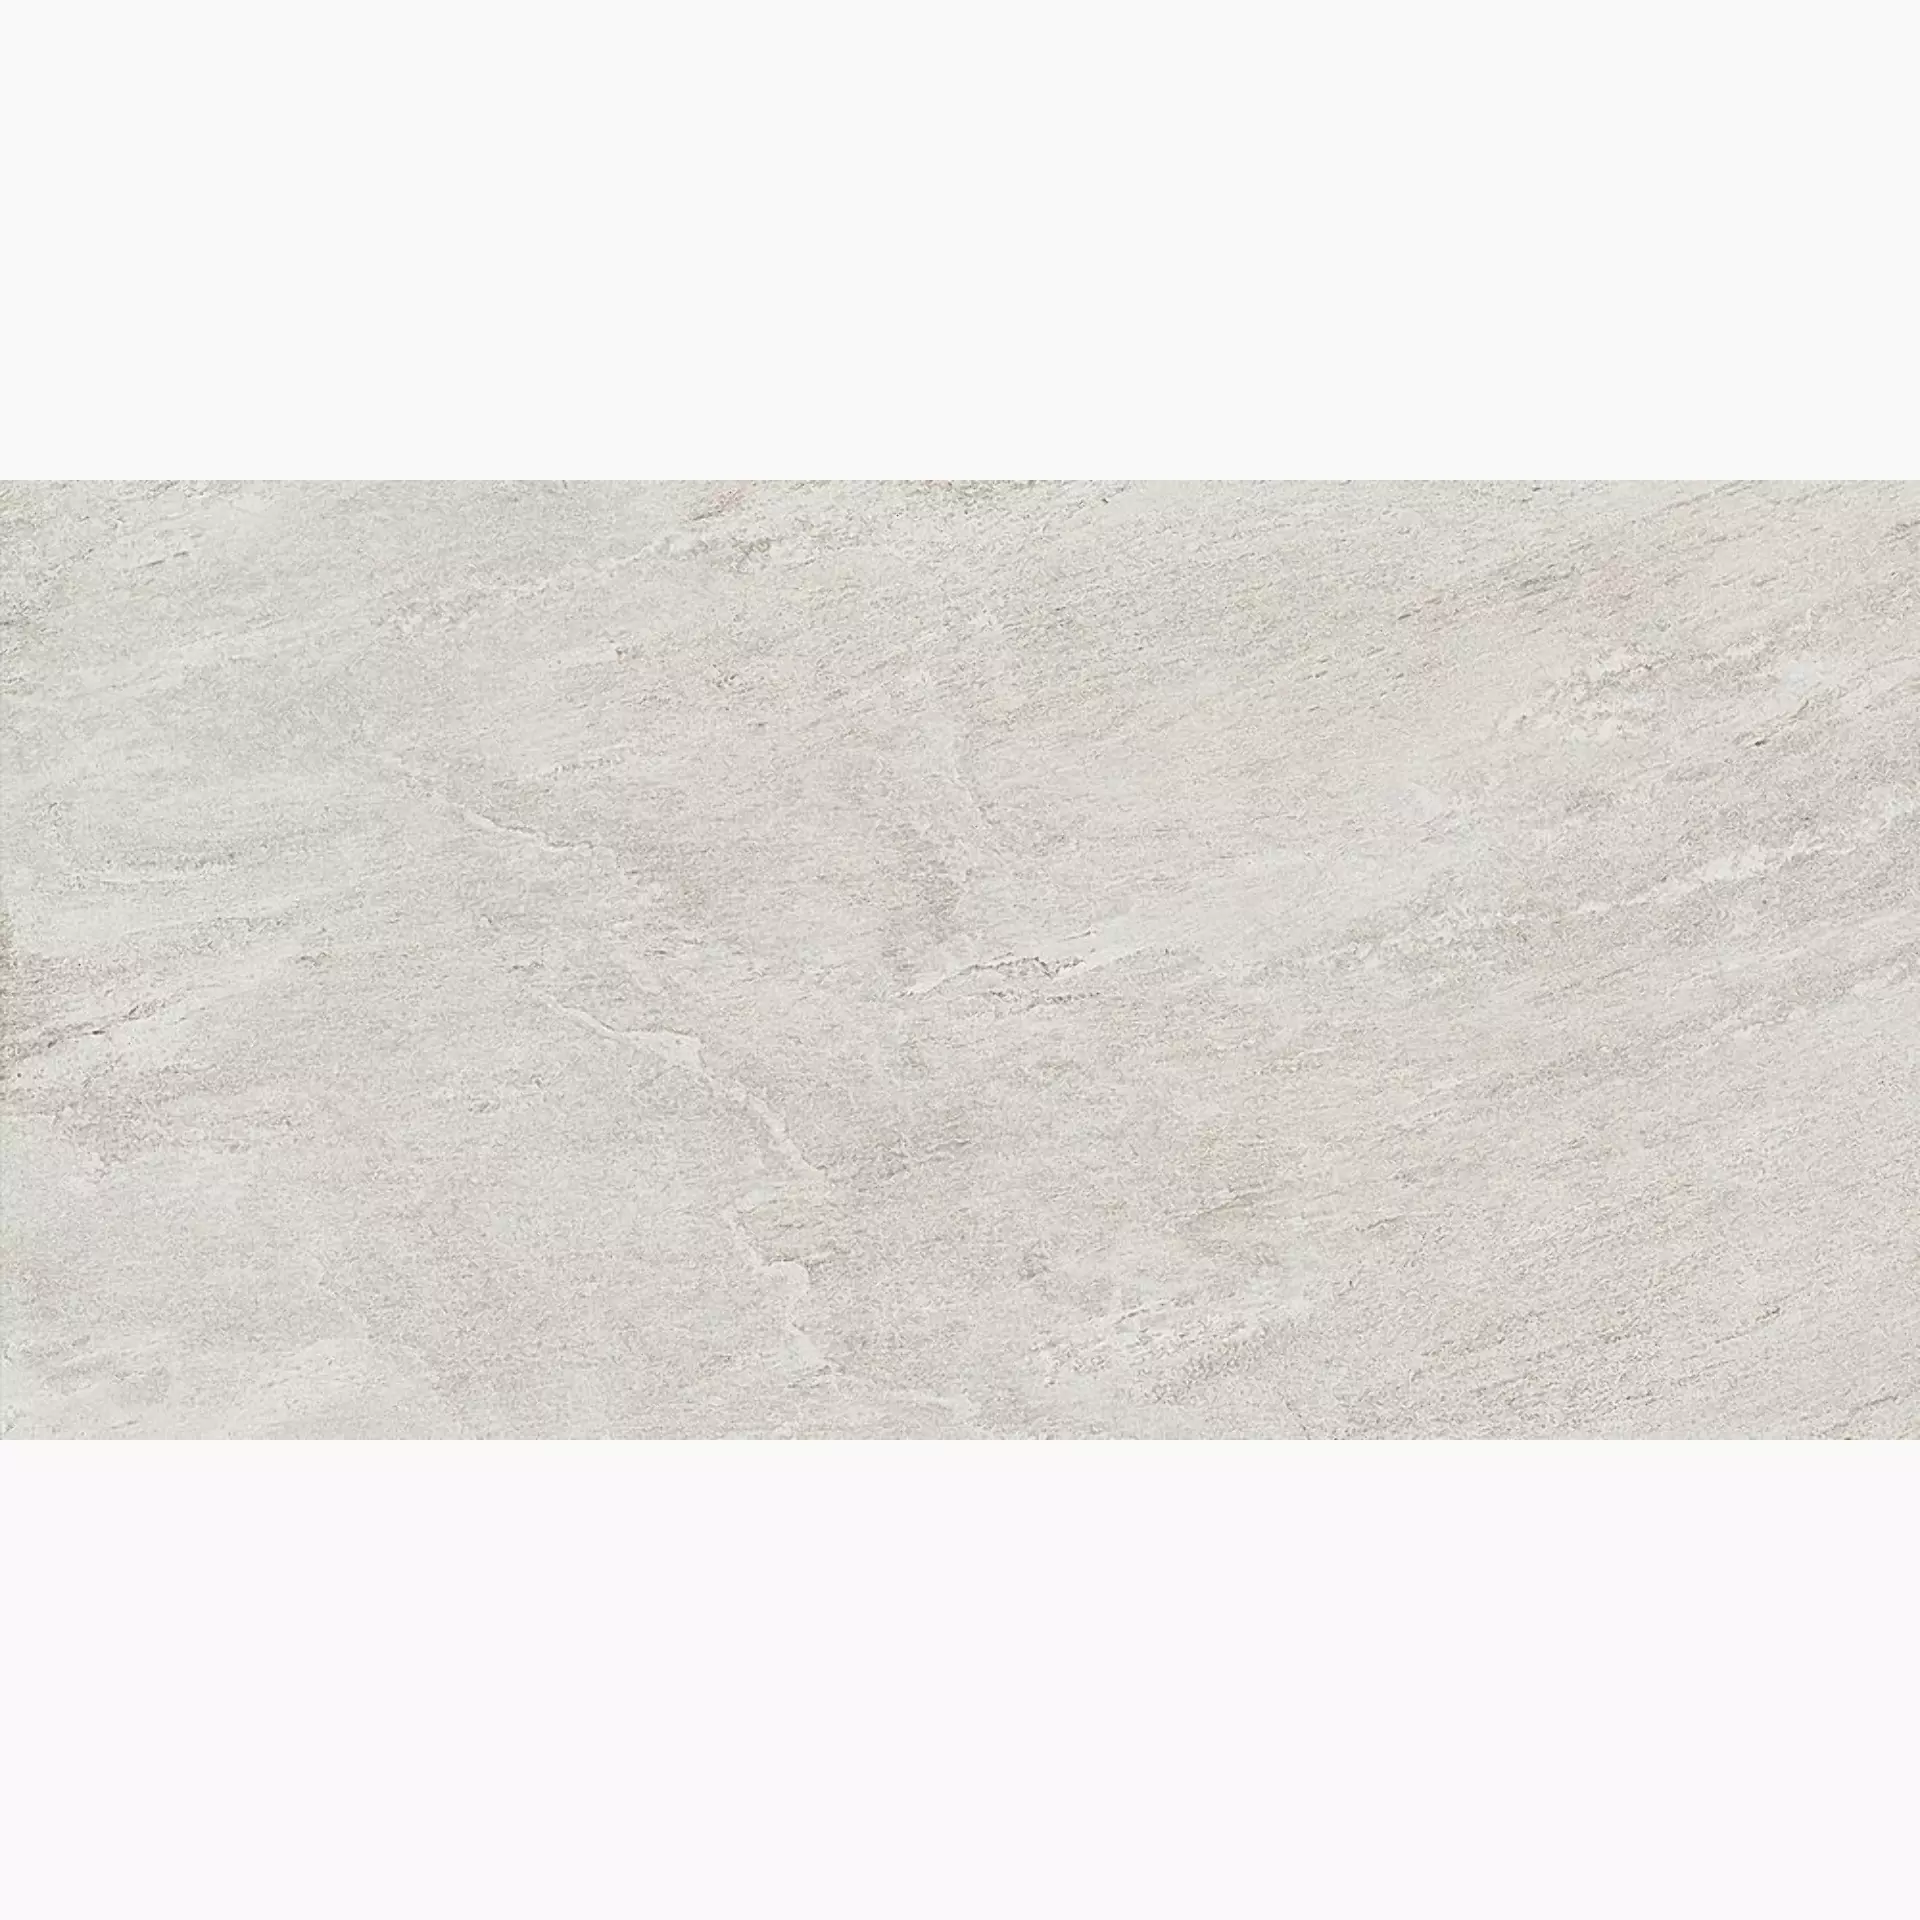 Century Stonerock White Stone Two – Grip 0119812 50x100cm 20mm